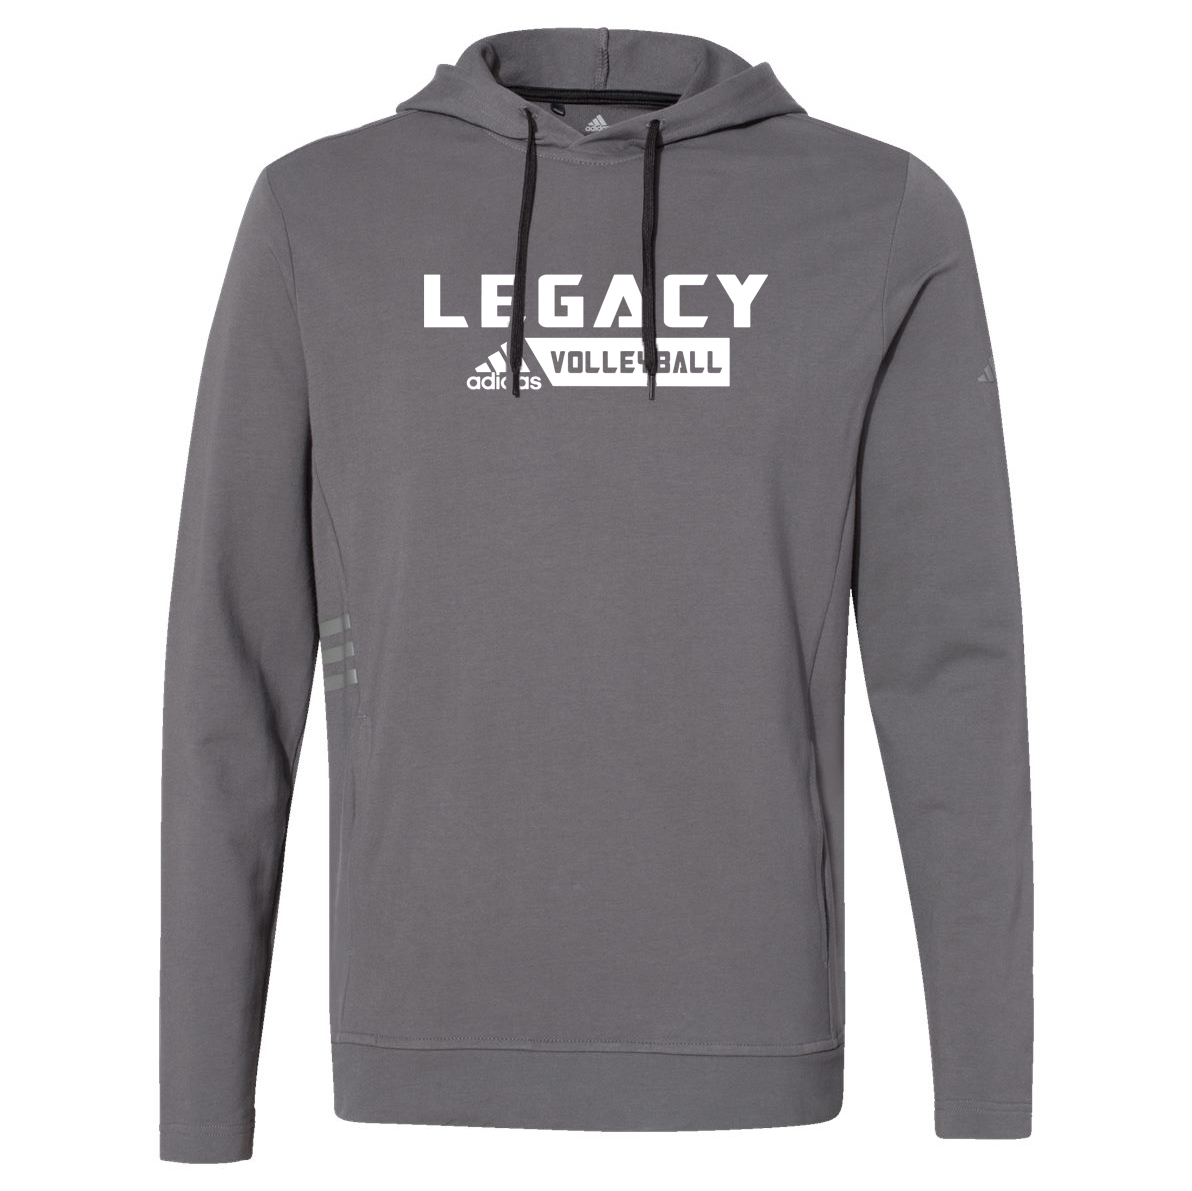 Legacy Volleyball Club Adidas Lightweight Sweatshirt